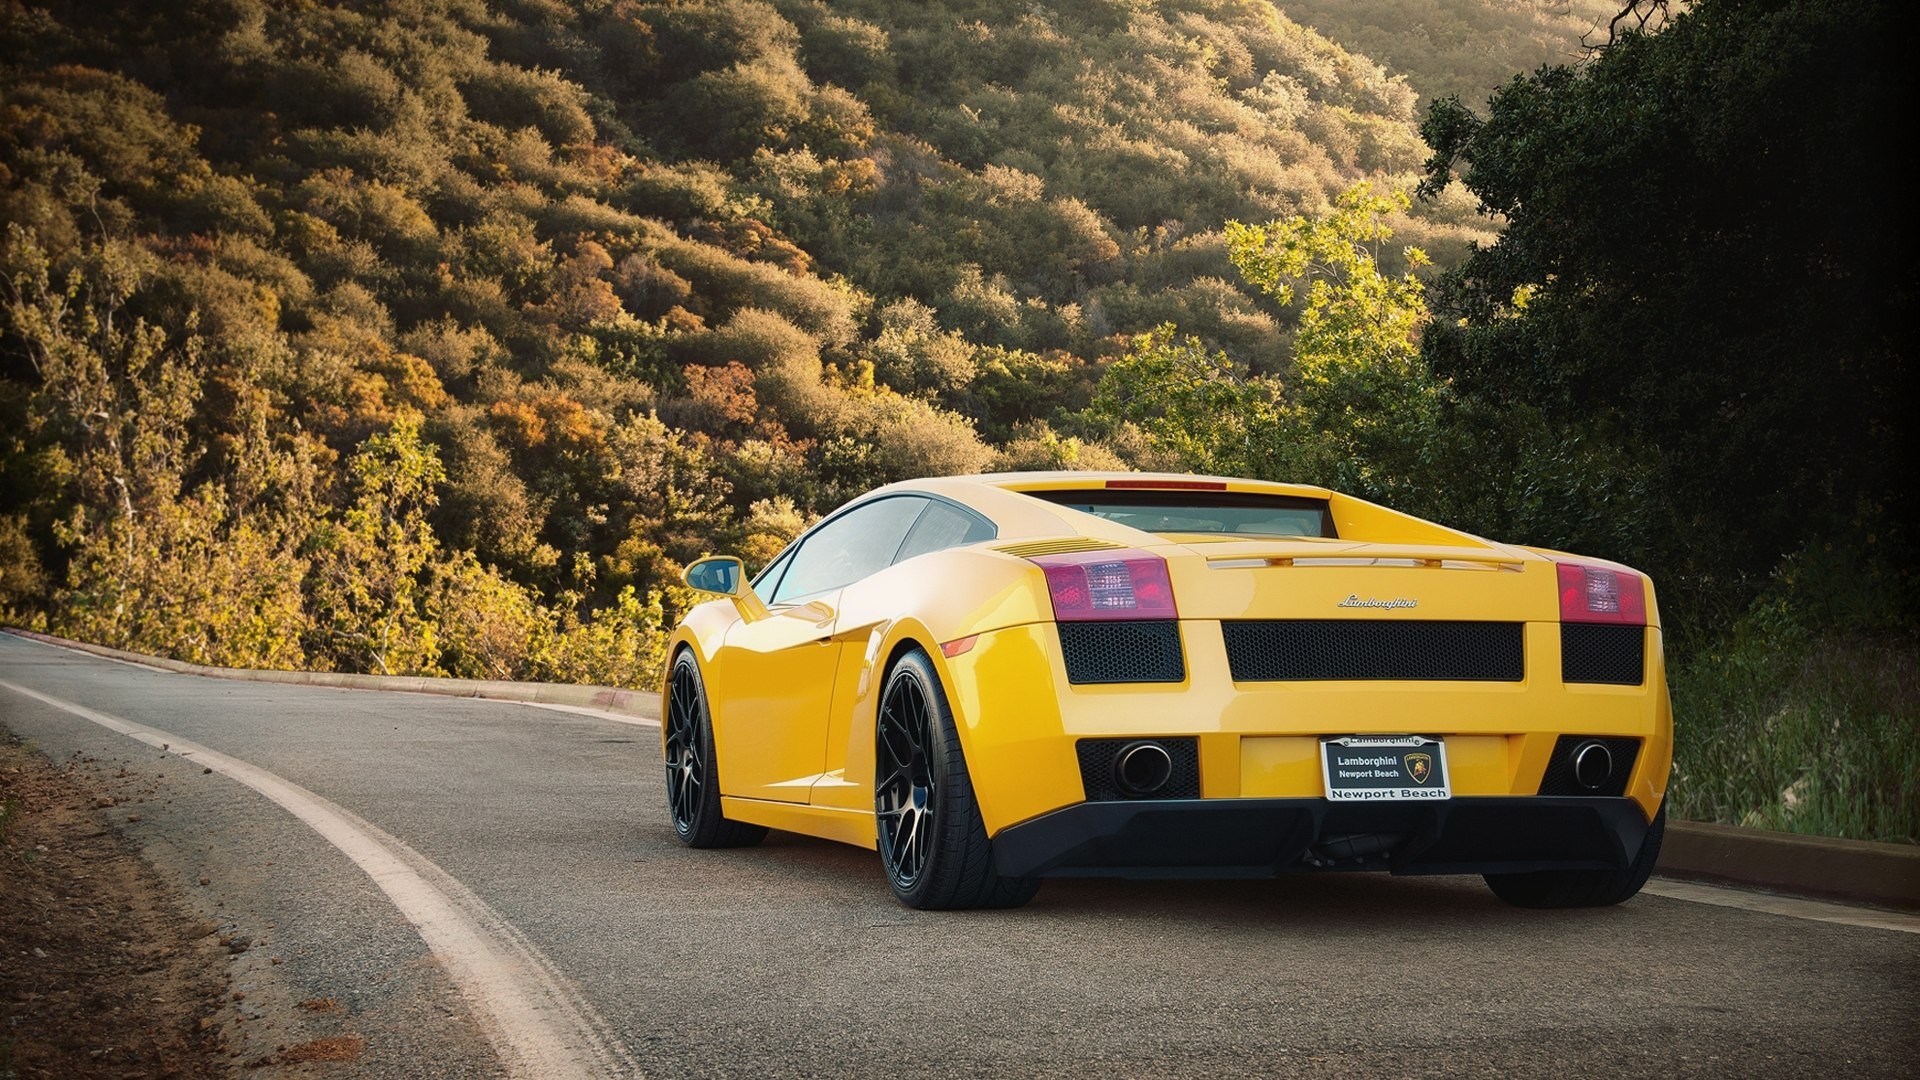 Wallpapers Lamborghini yellow country road on the desktop